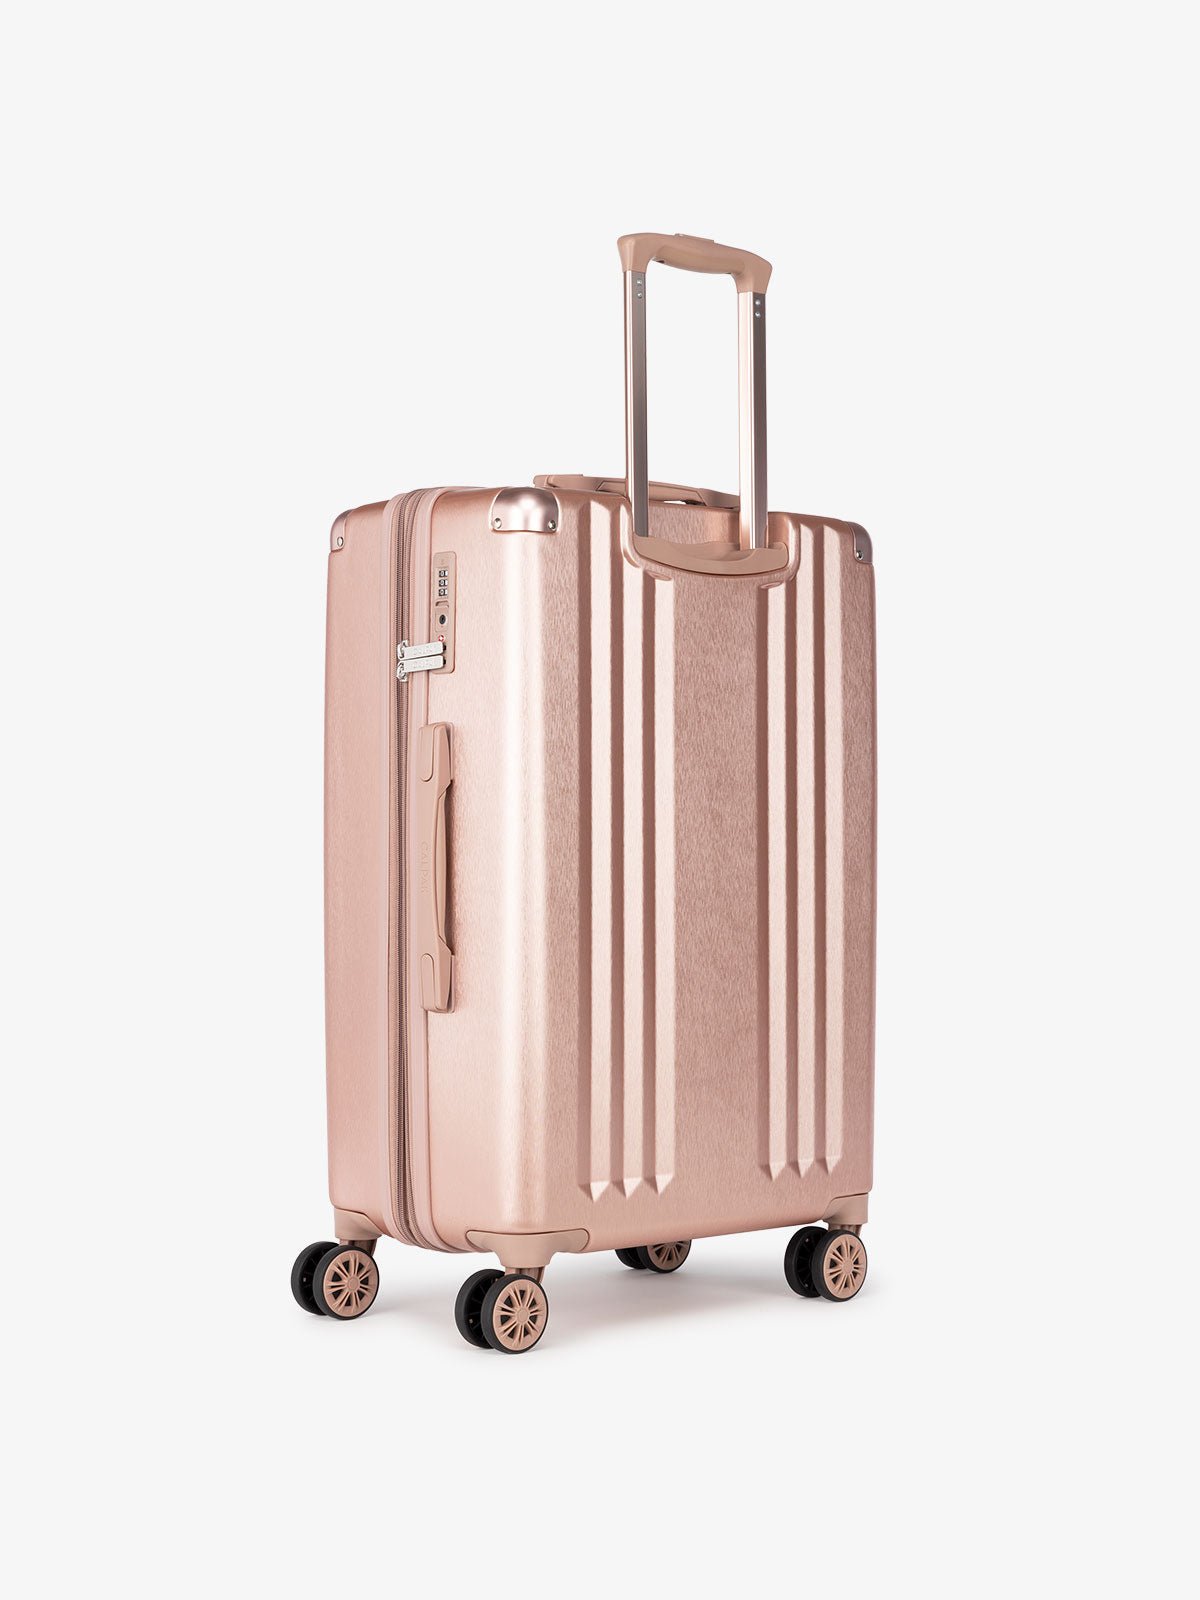 CALPAK Ambeur pink rose gold medium 26 inch hard shell rolling suitcase